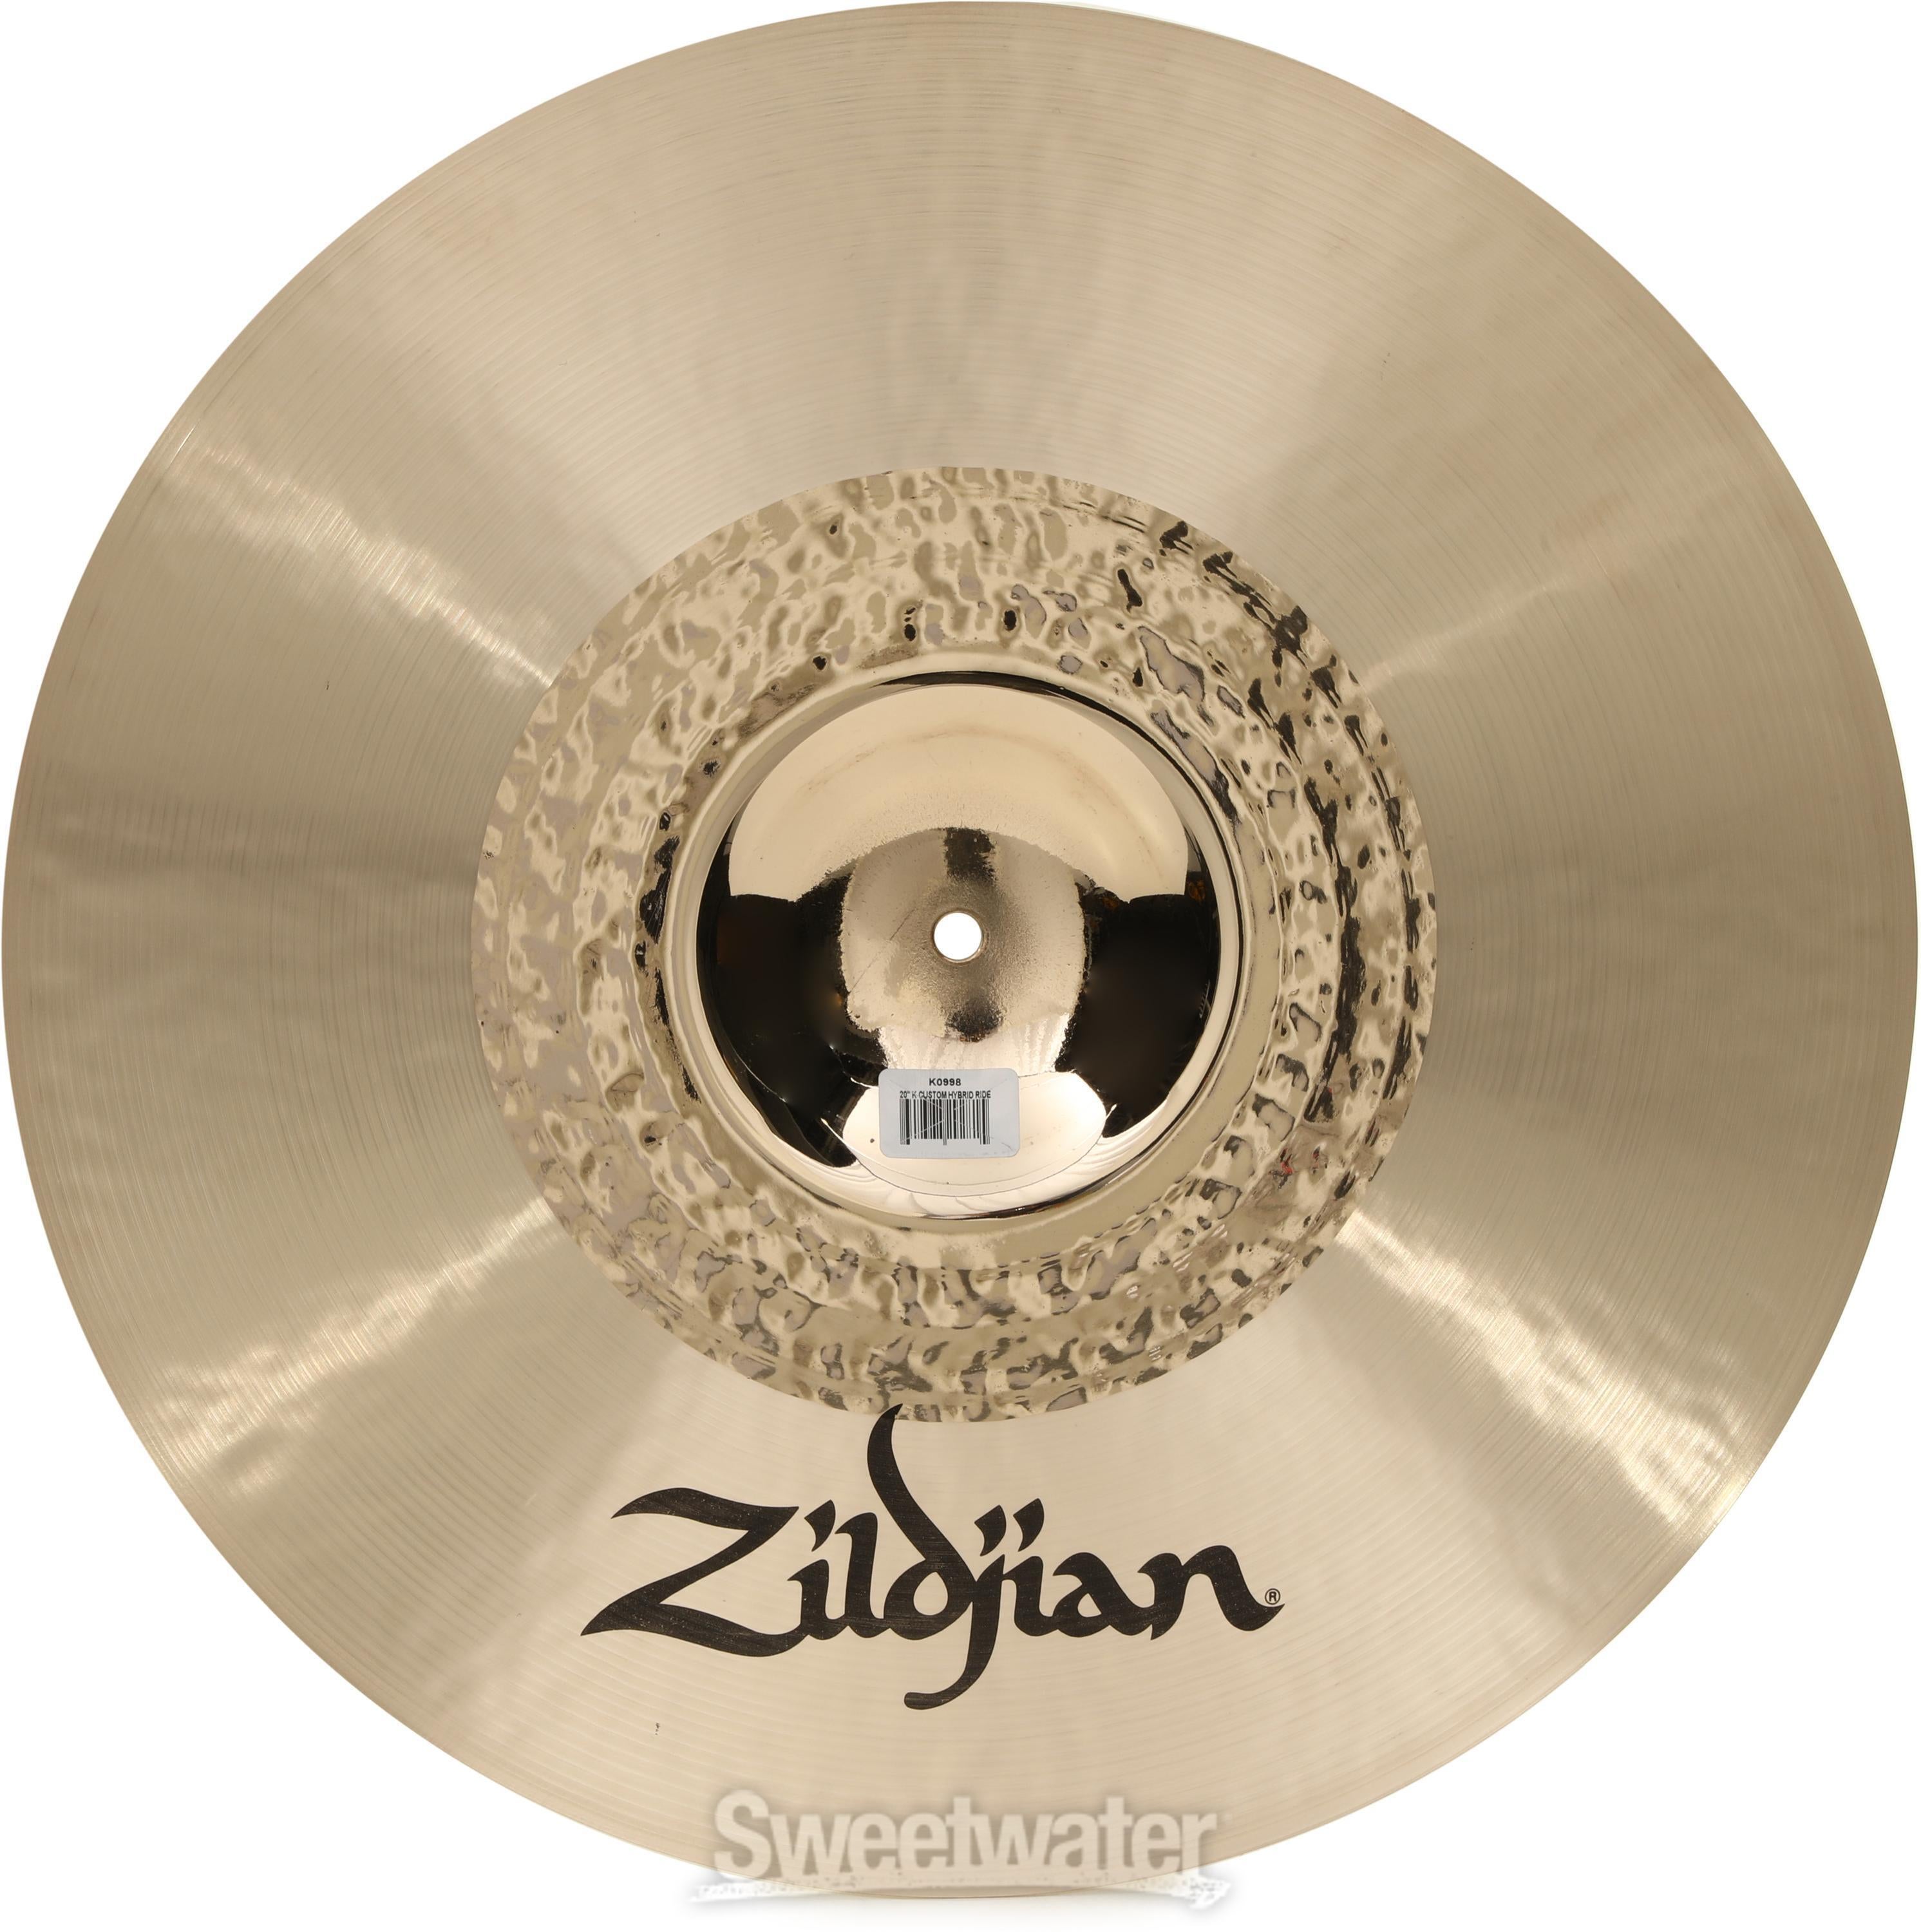 Zildjian 20 inch K Custom Hybrid Ride Cymbal